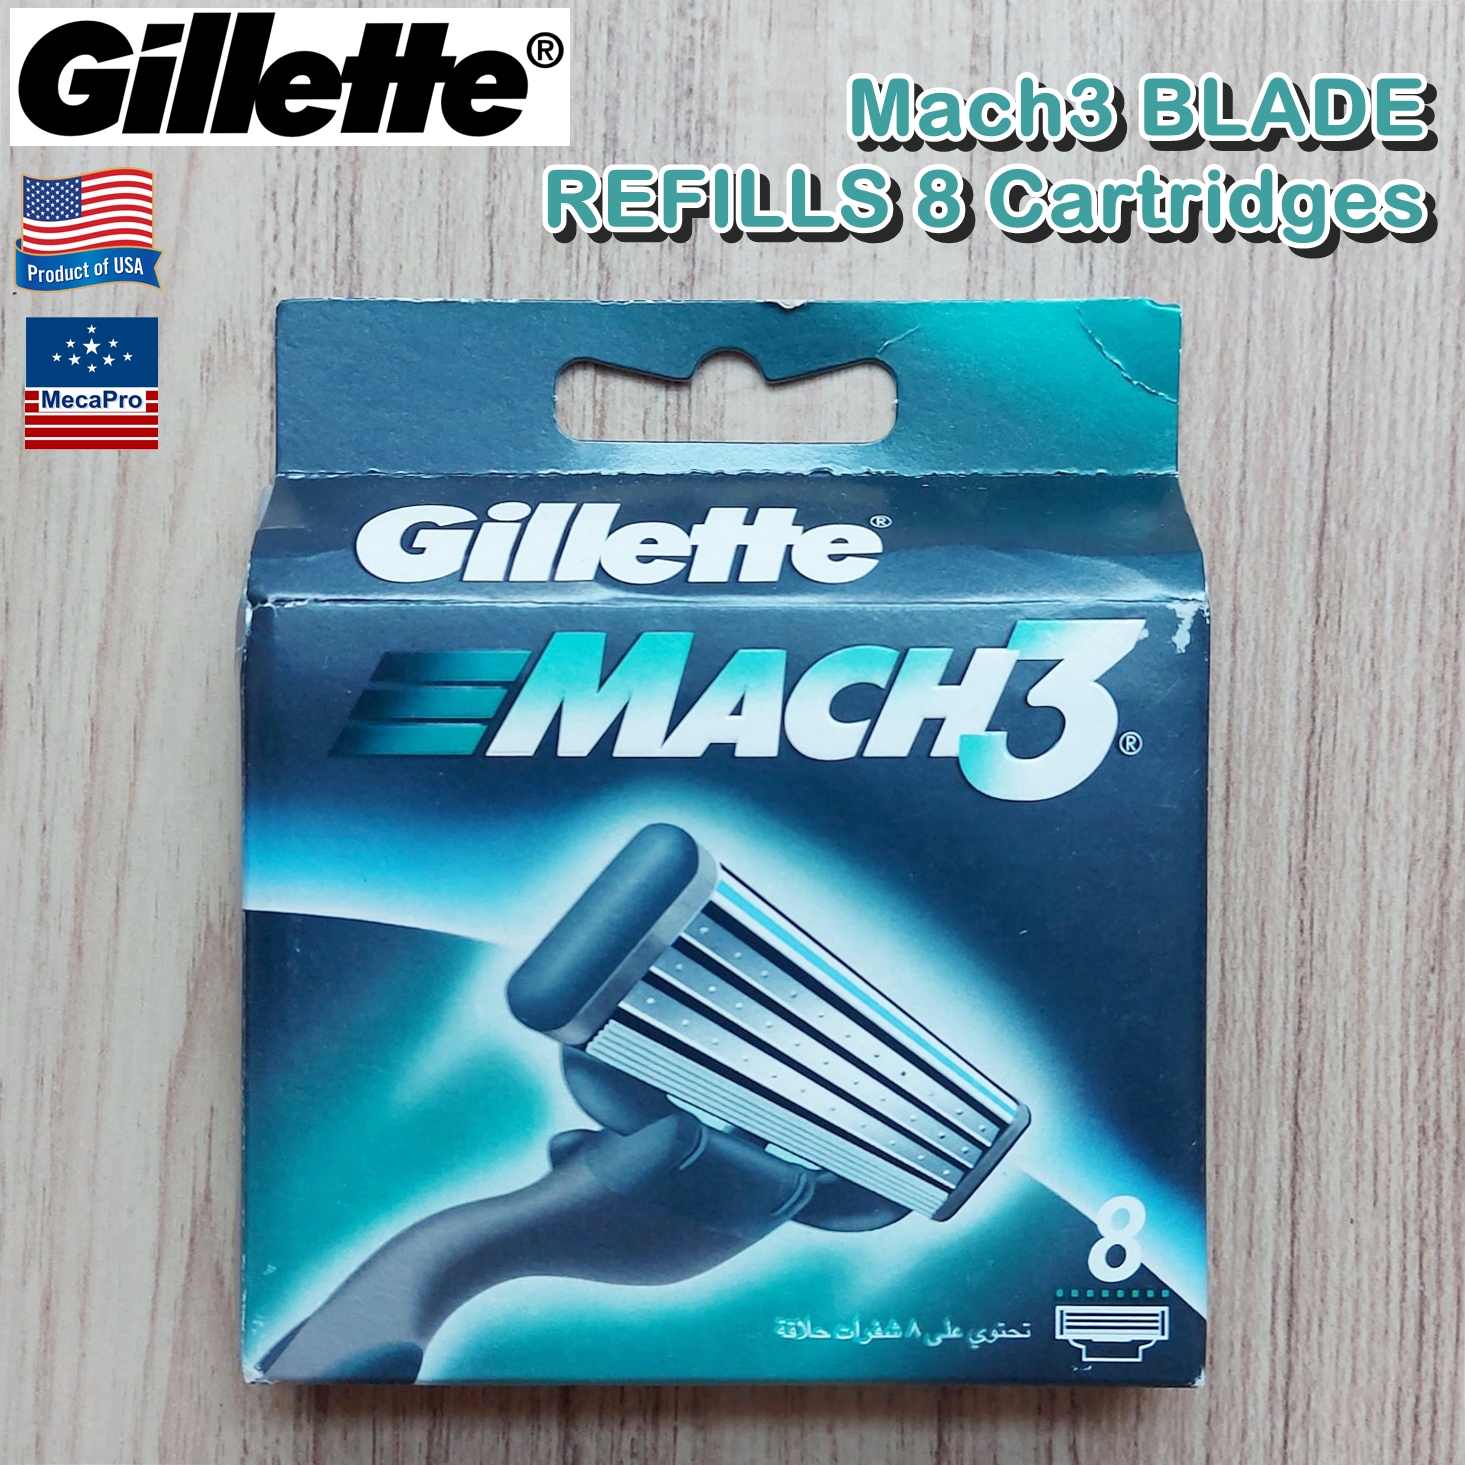 Gillette® Mach3® BLADE REFILLS 8 Cartridges ใบมีดโกน ยิลเลตต์ มัคทรี